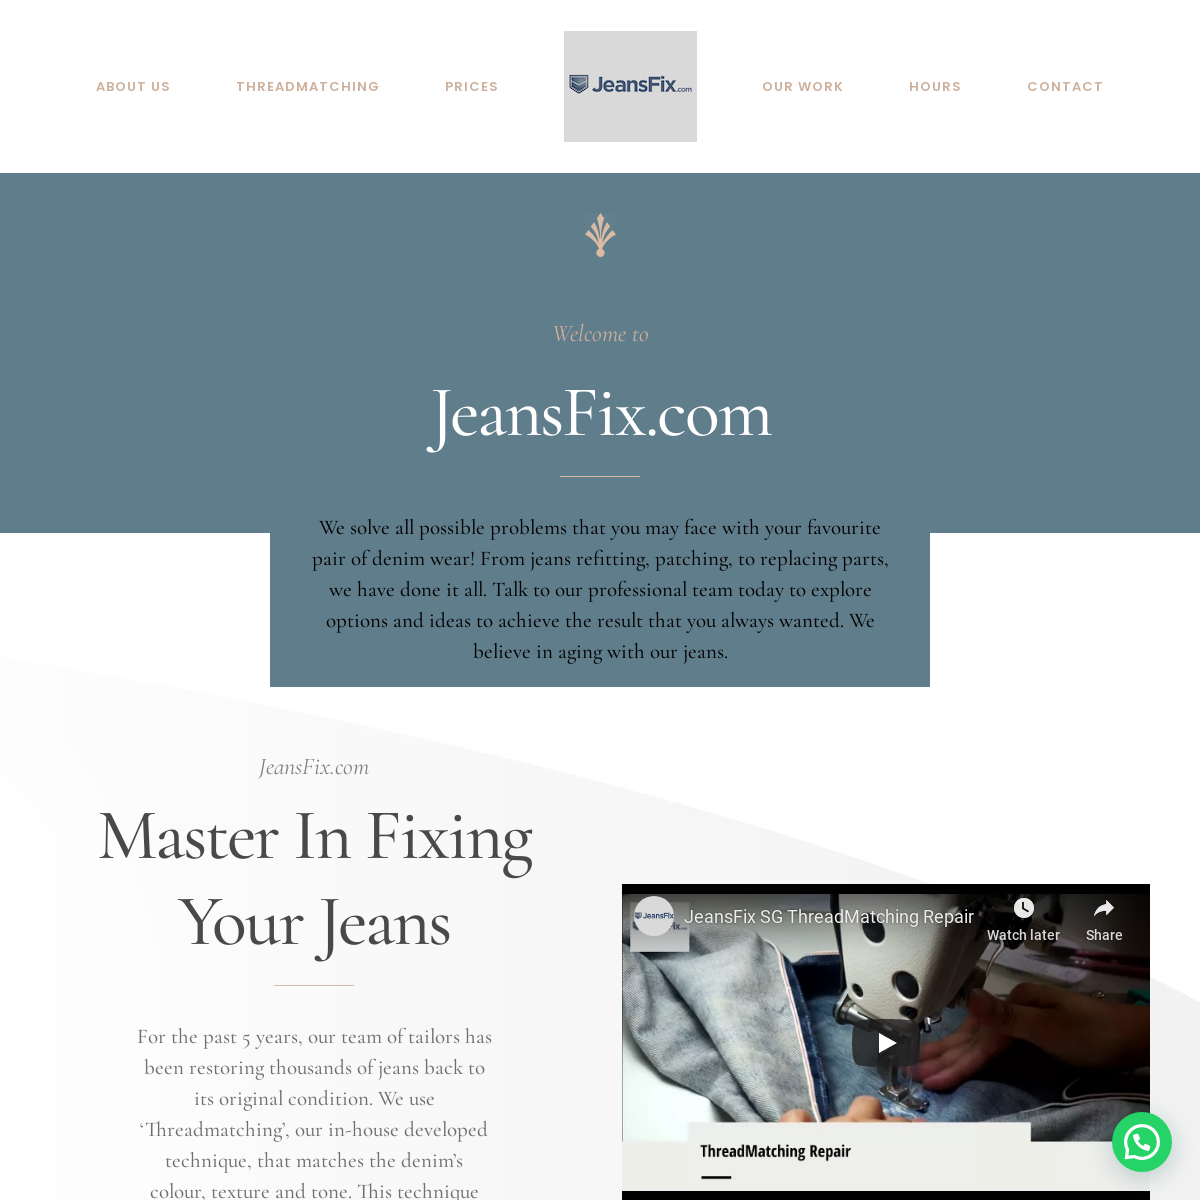 A complete backup of jeansfix.com